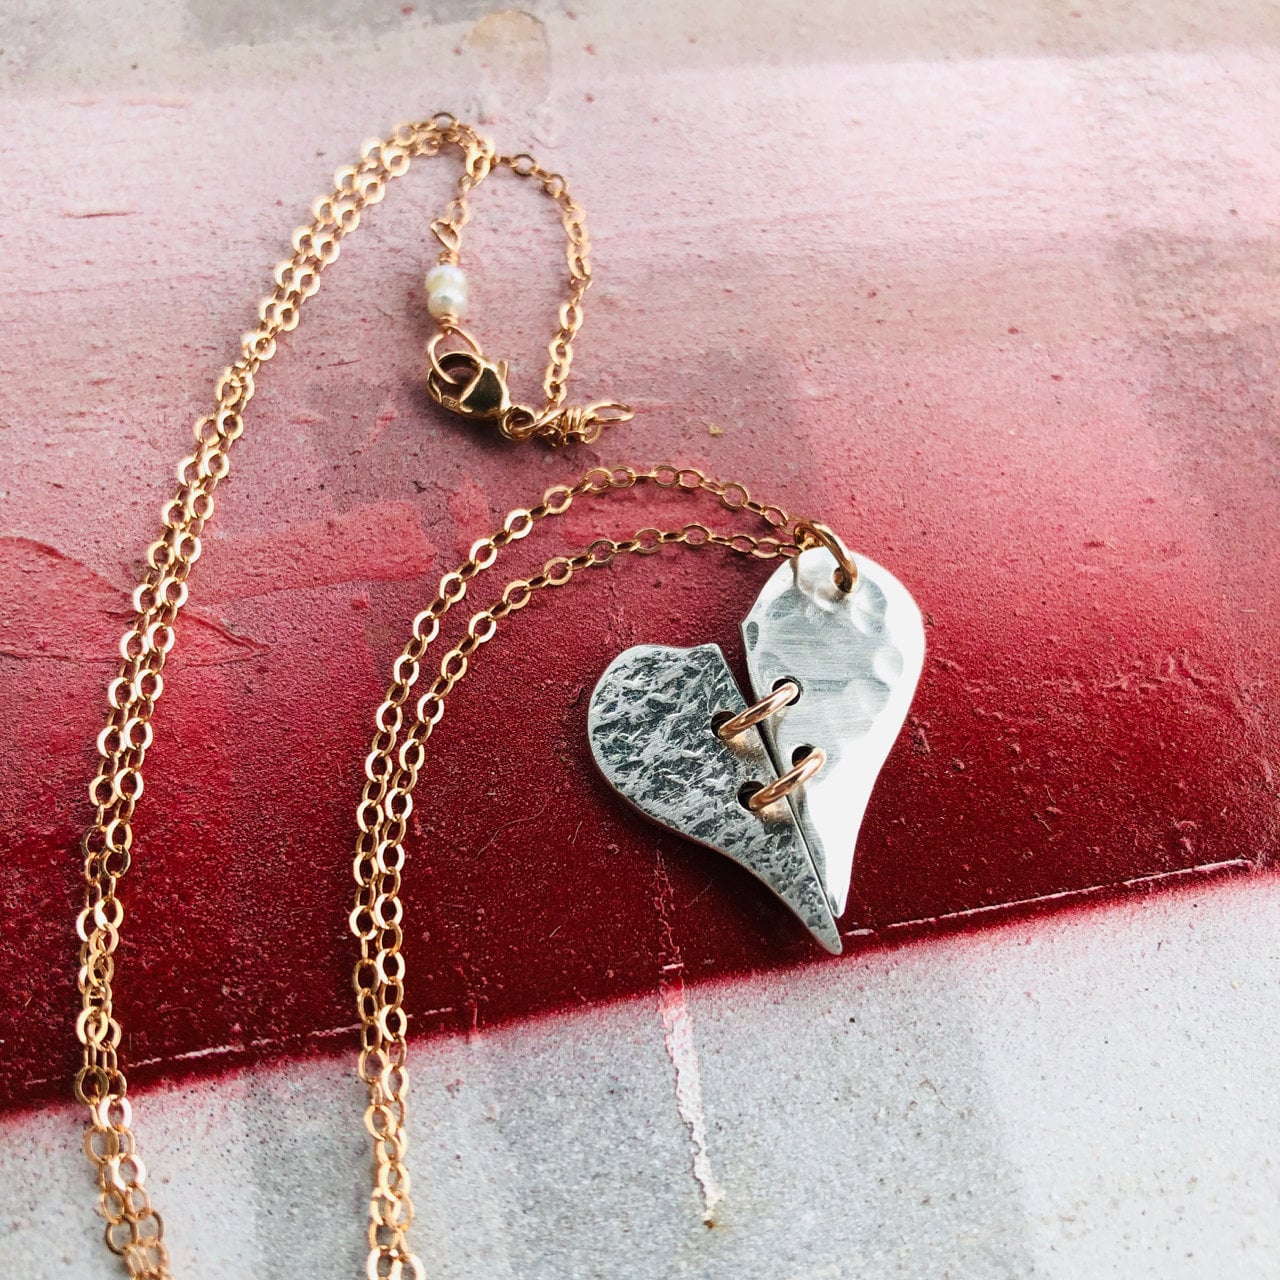 Couple Heart Necklace [Half Heart Set] | FARUZO